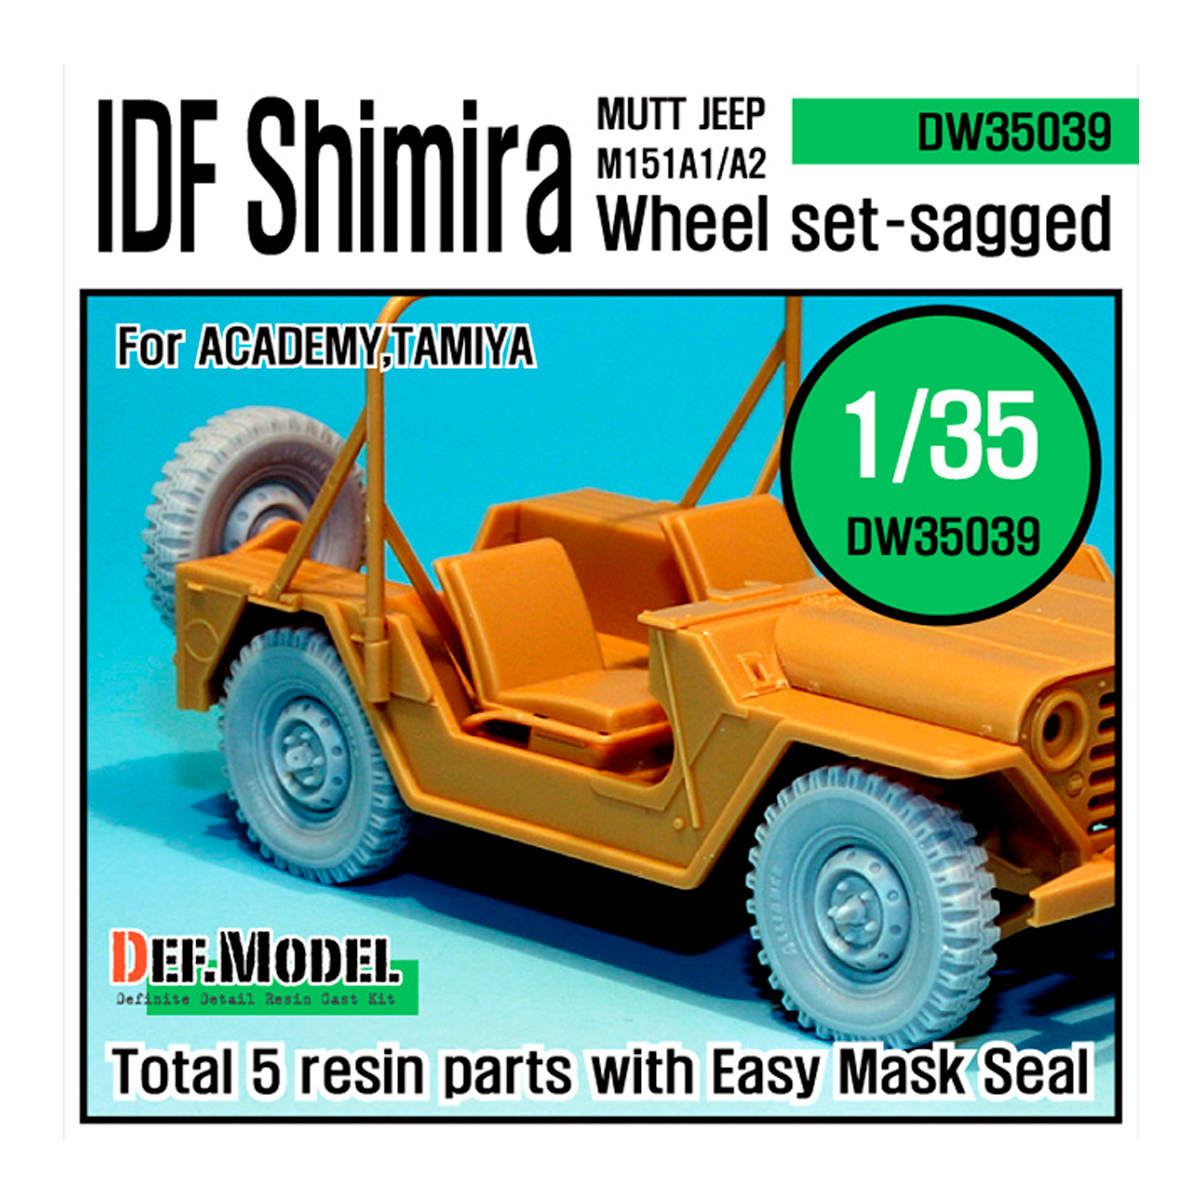 IDF M151 Shimira sagged wheel set (for Academy 1/35)